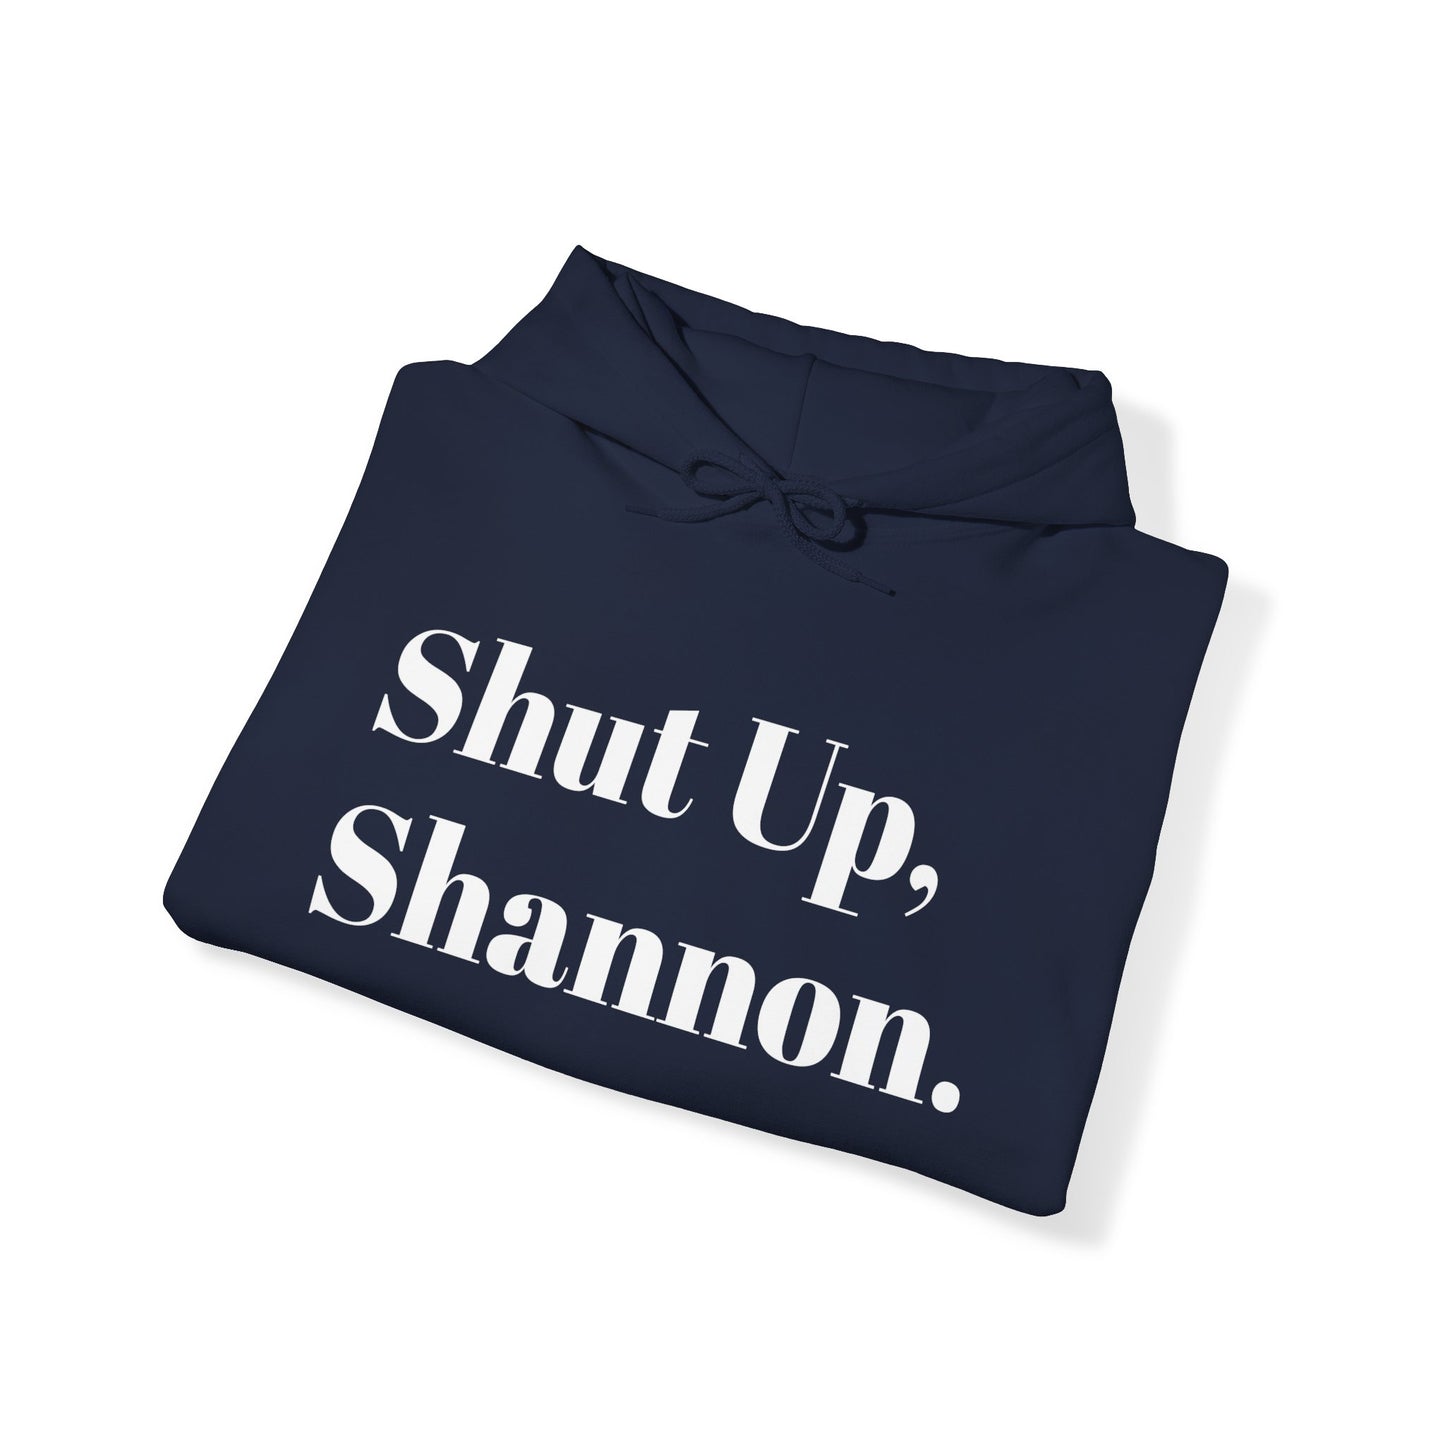 Chrisism No. 2 Hoodie - Shut up, Shannon.